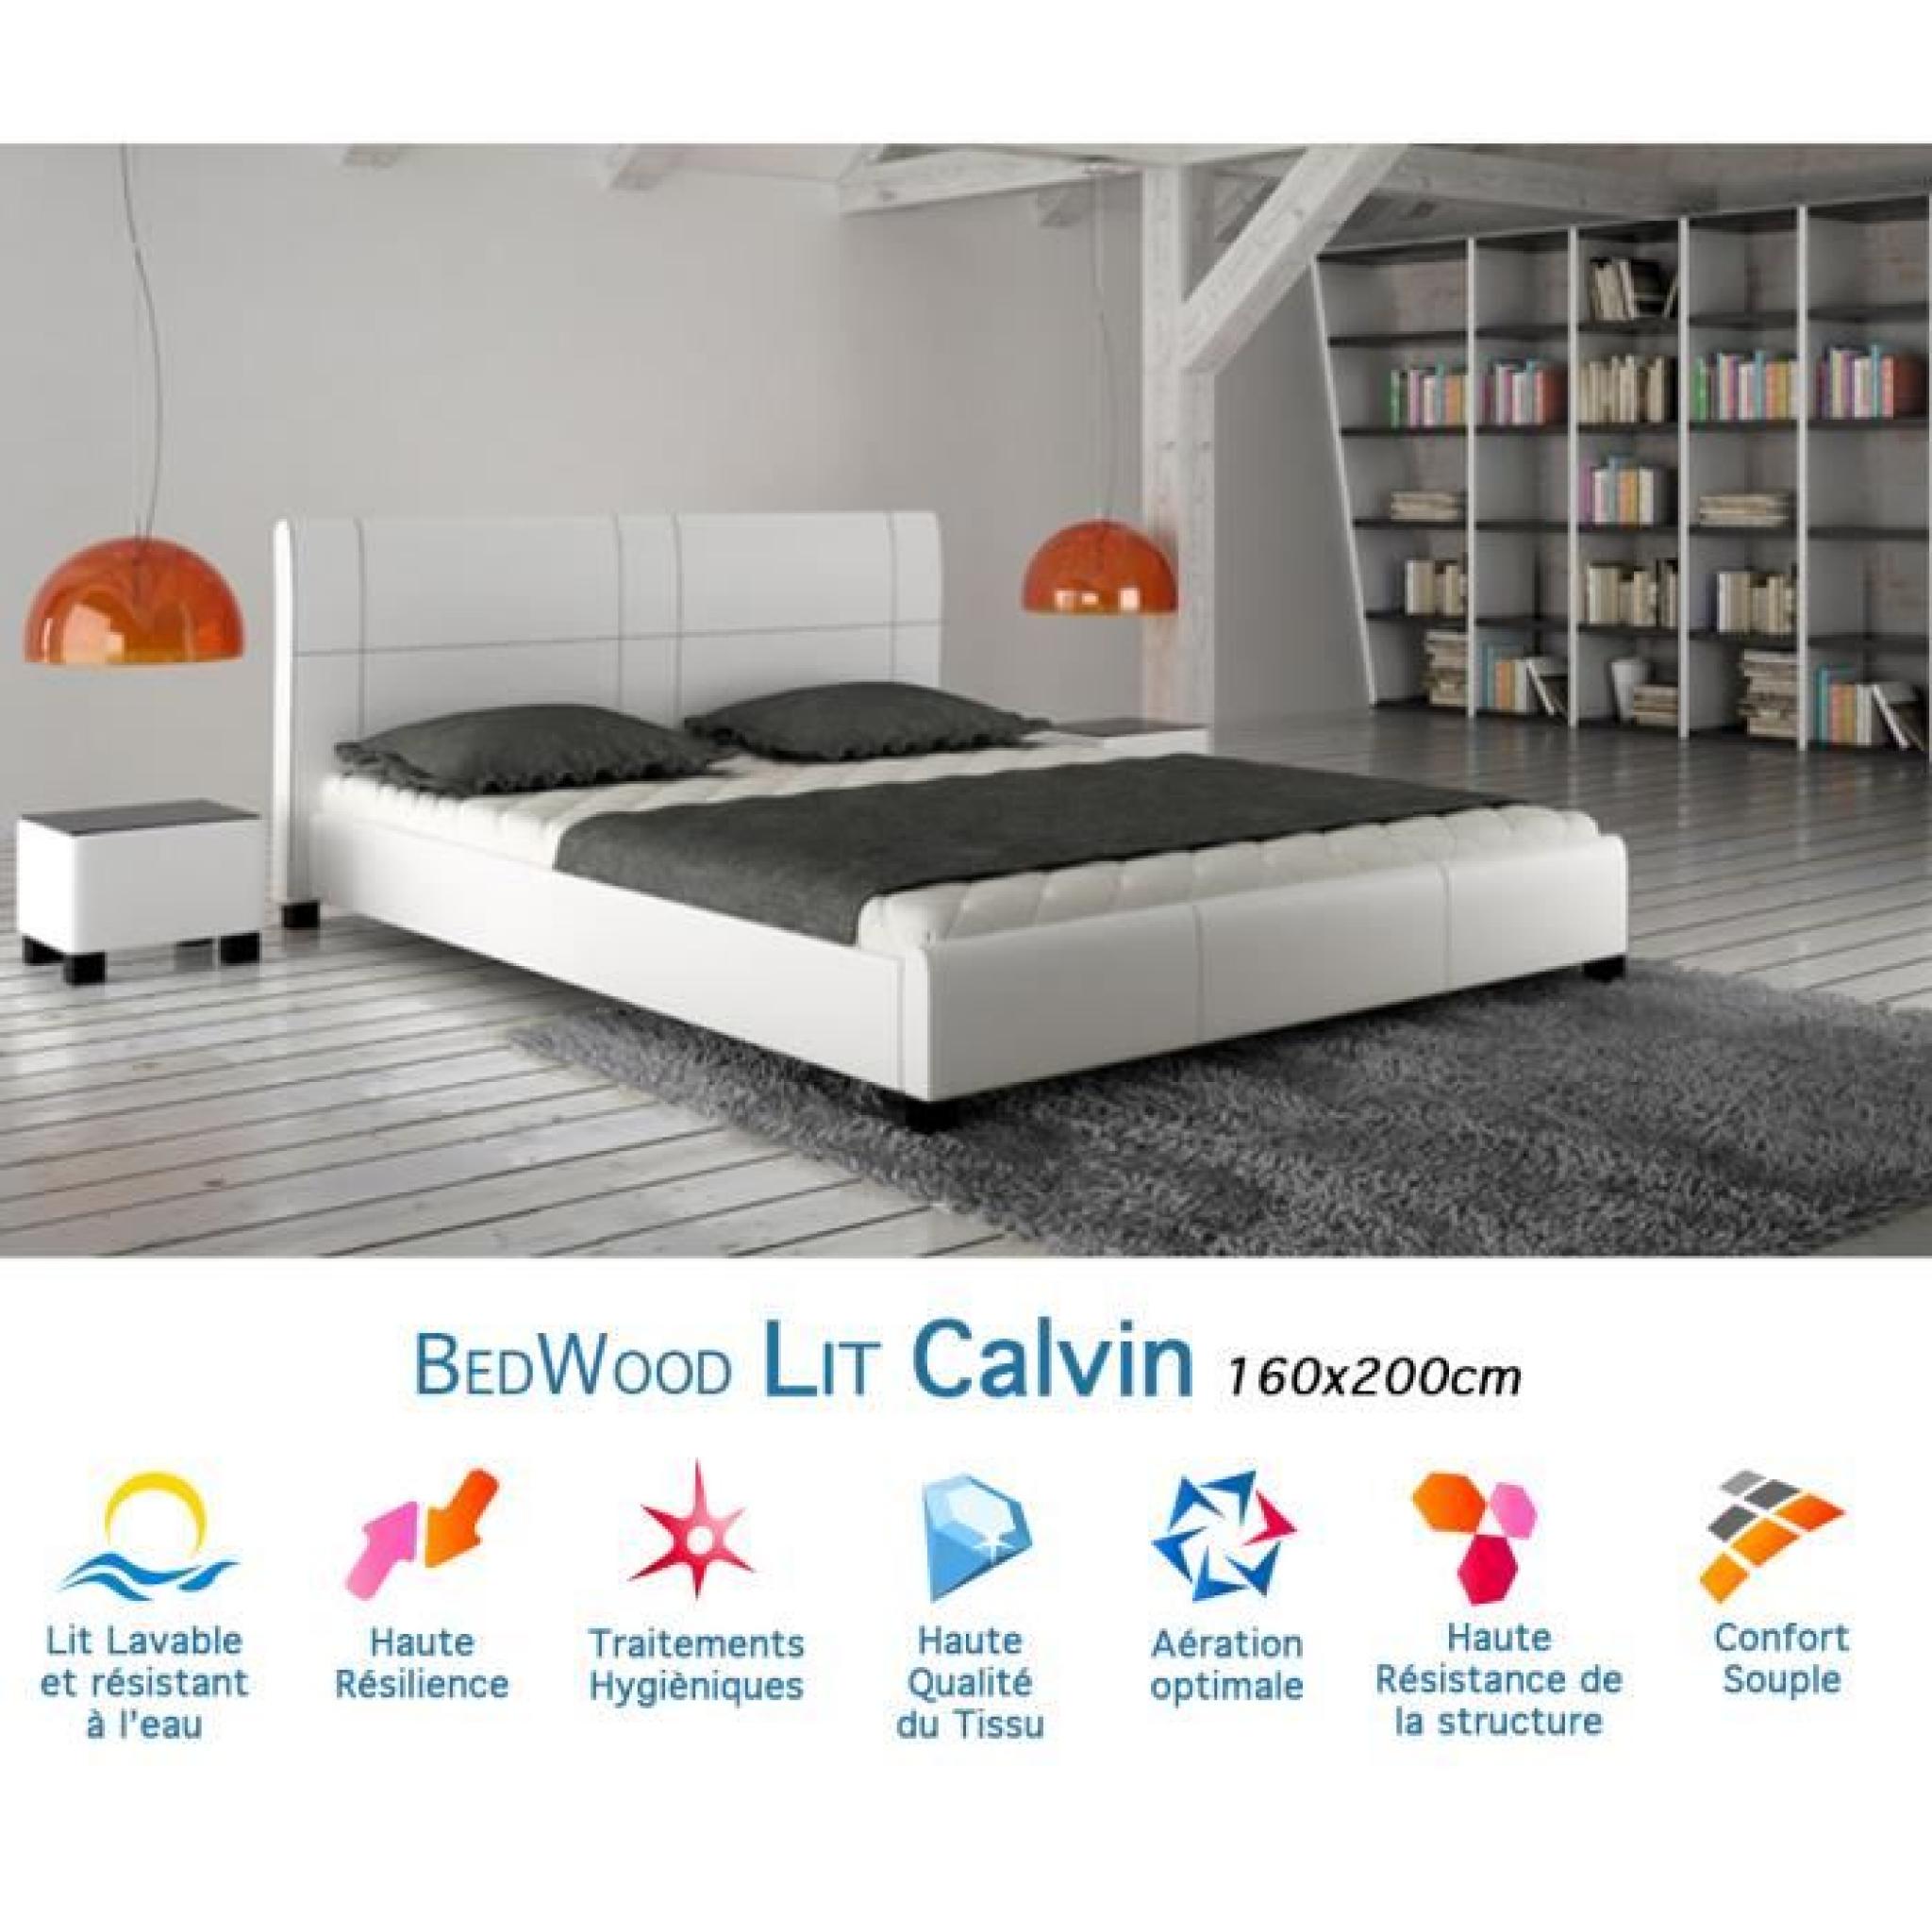 Lit Design Bedwood Calvin 160x200cm